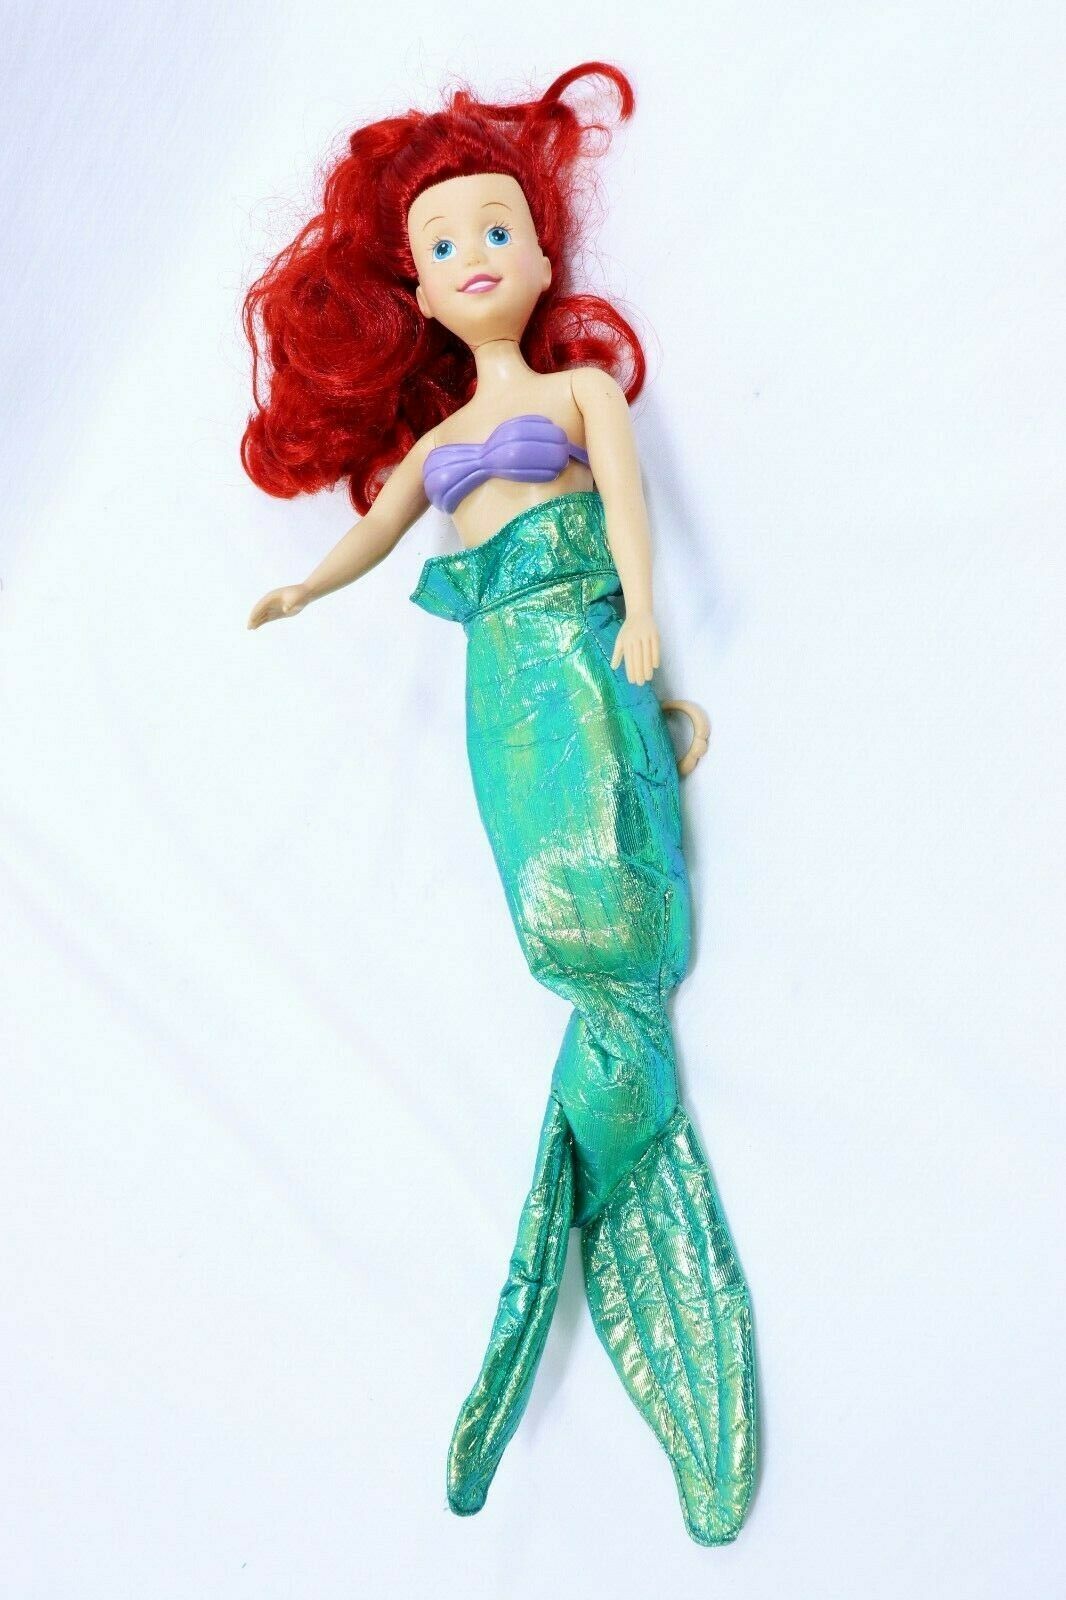 Disney Little Mermaid Ariel Original Film Doll 1990's Rare Gift Wrapped